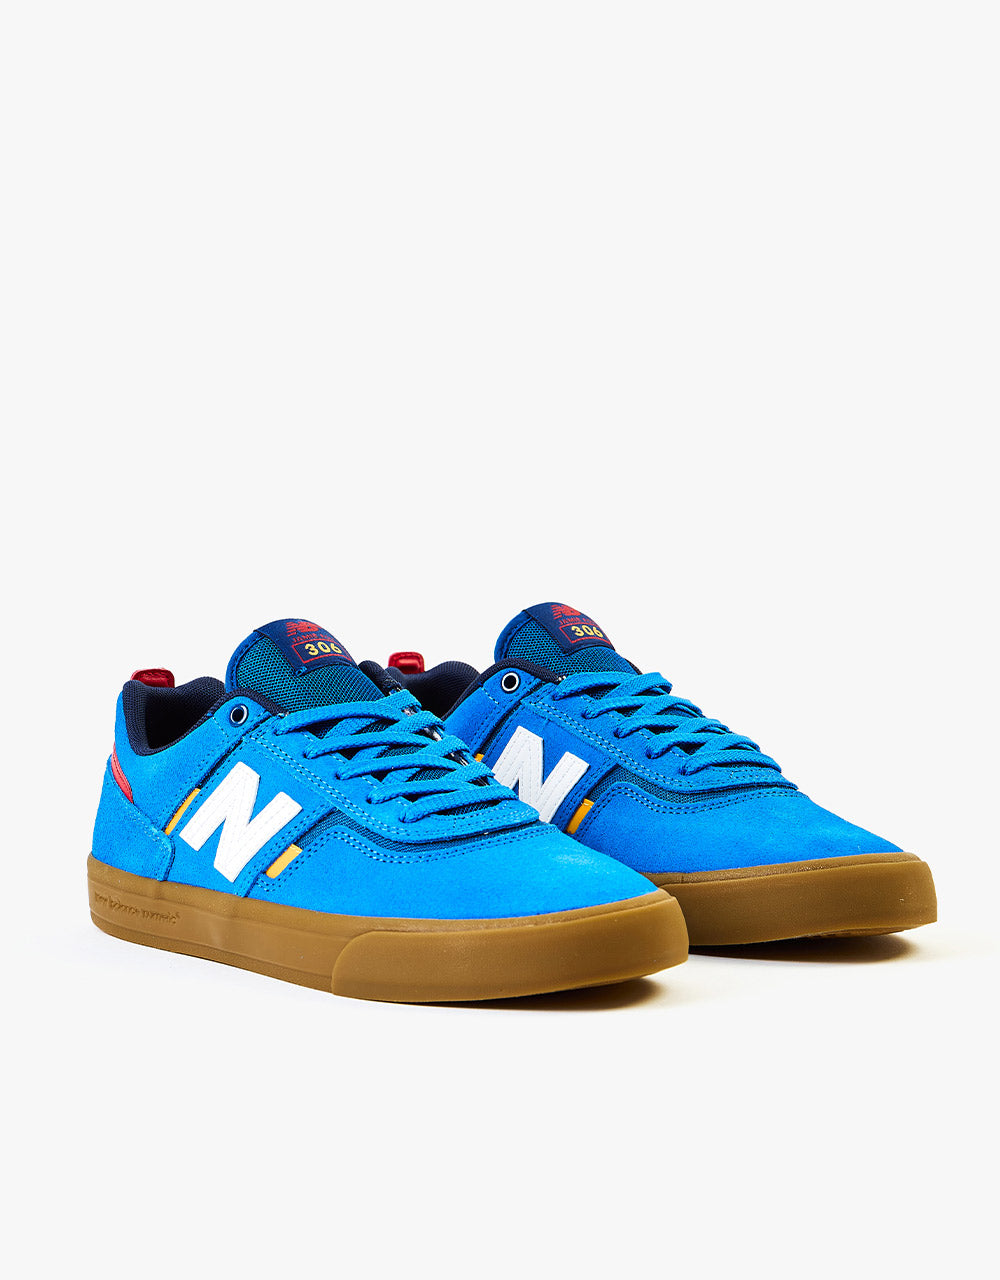 New Balance Numeric 306 Skate Shoes - Blue/Gum